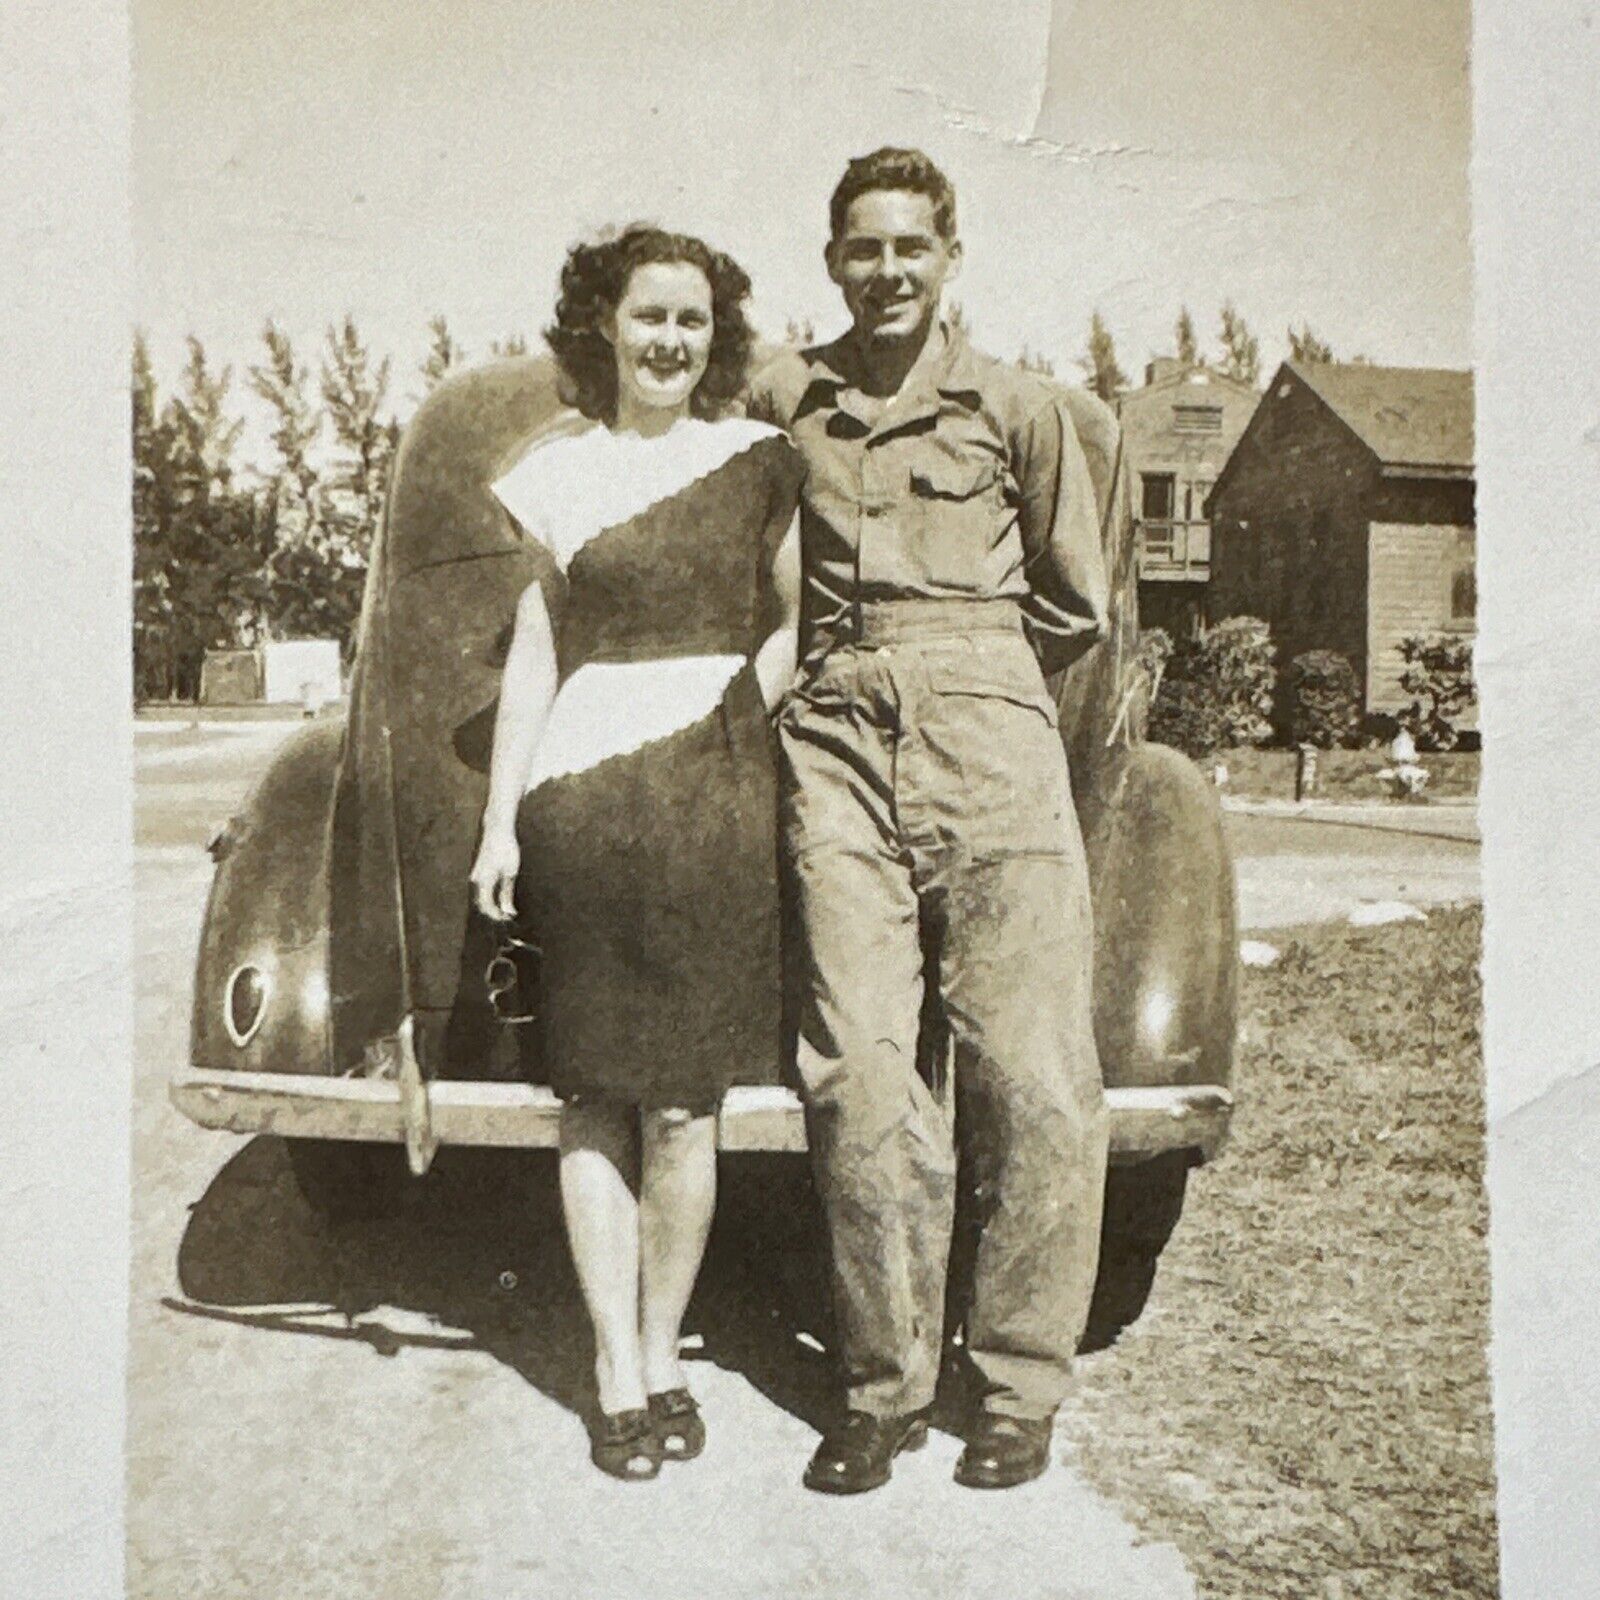 Young Love VINTAGE PHOTO Original Snapshot Attractive Couple Soldier￼ 1940s